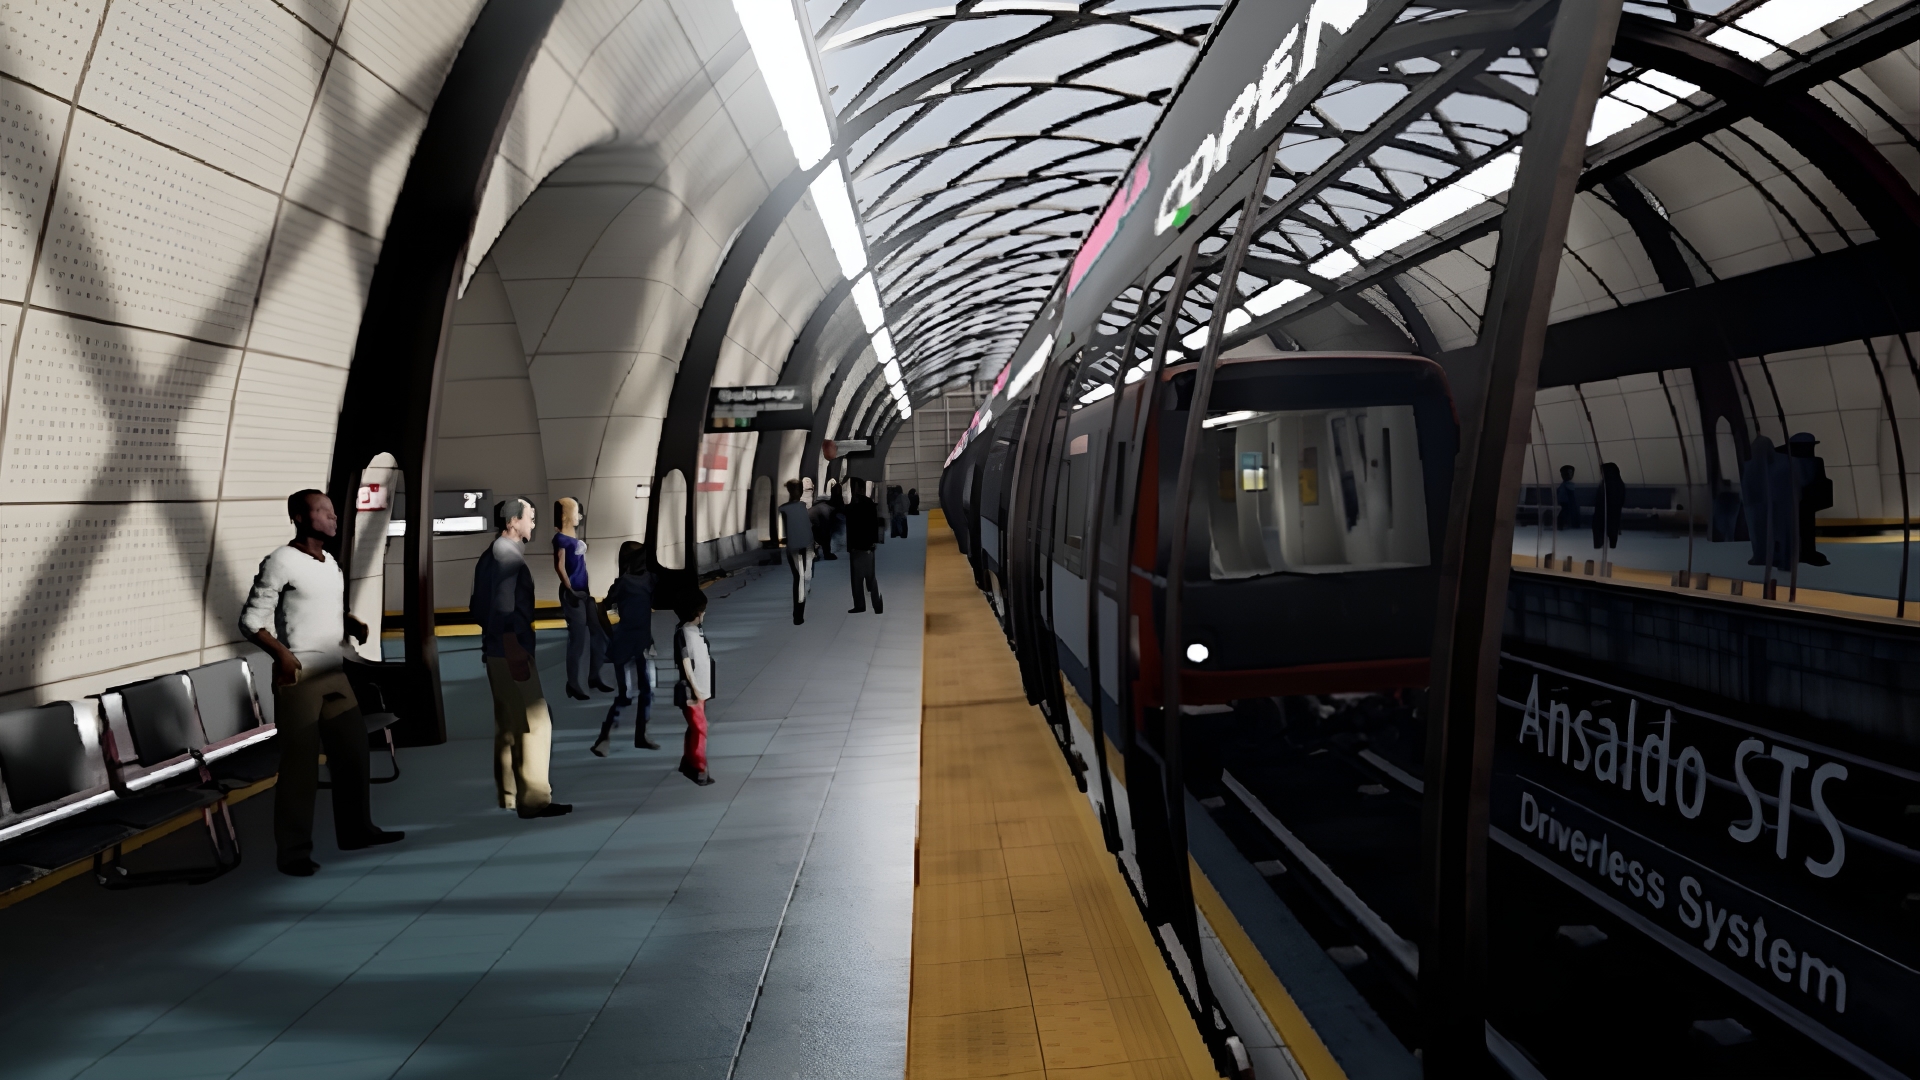 The underground platform in the "Ansaldo Driverless System" VR experience